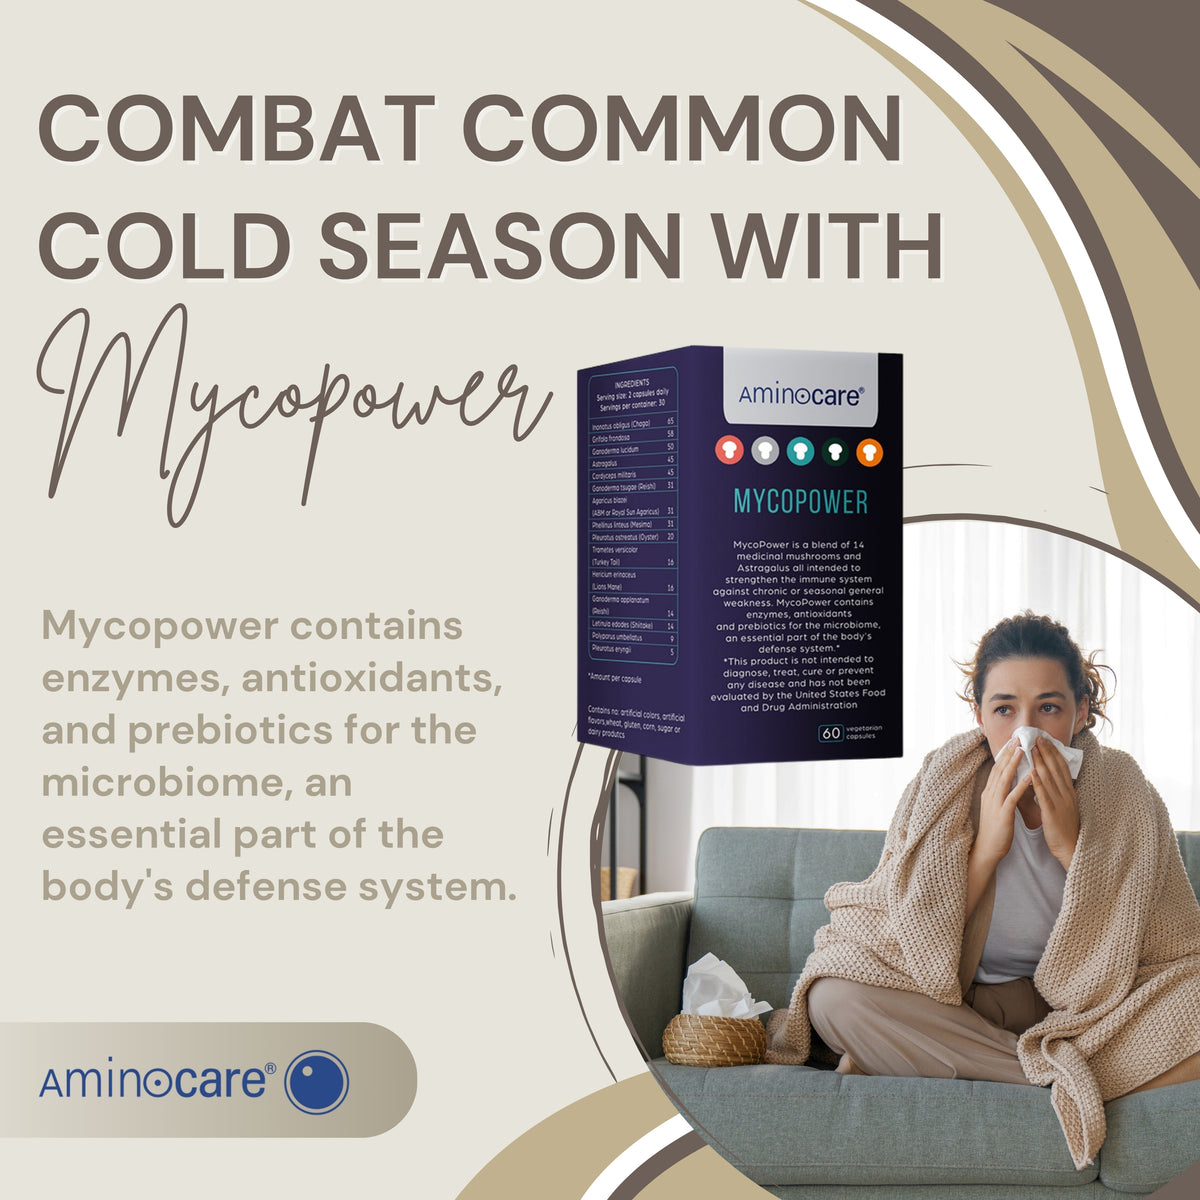 Combat Common Cold season with Medicinal Mushrooms!